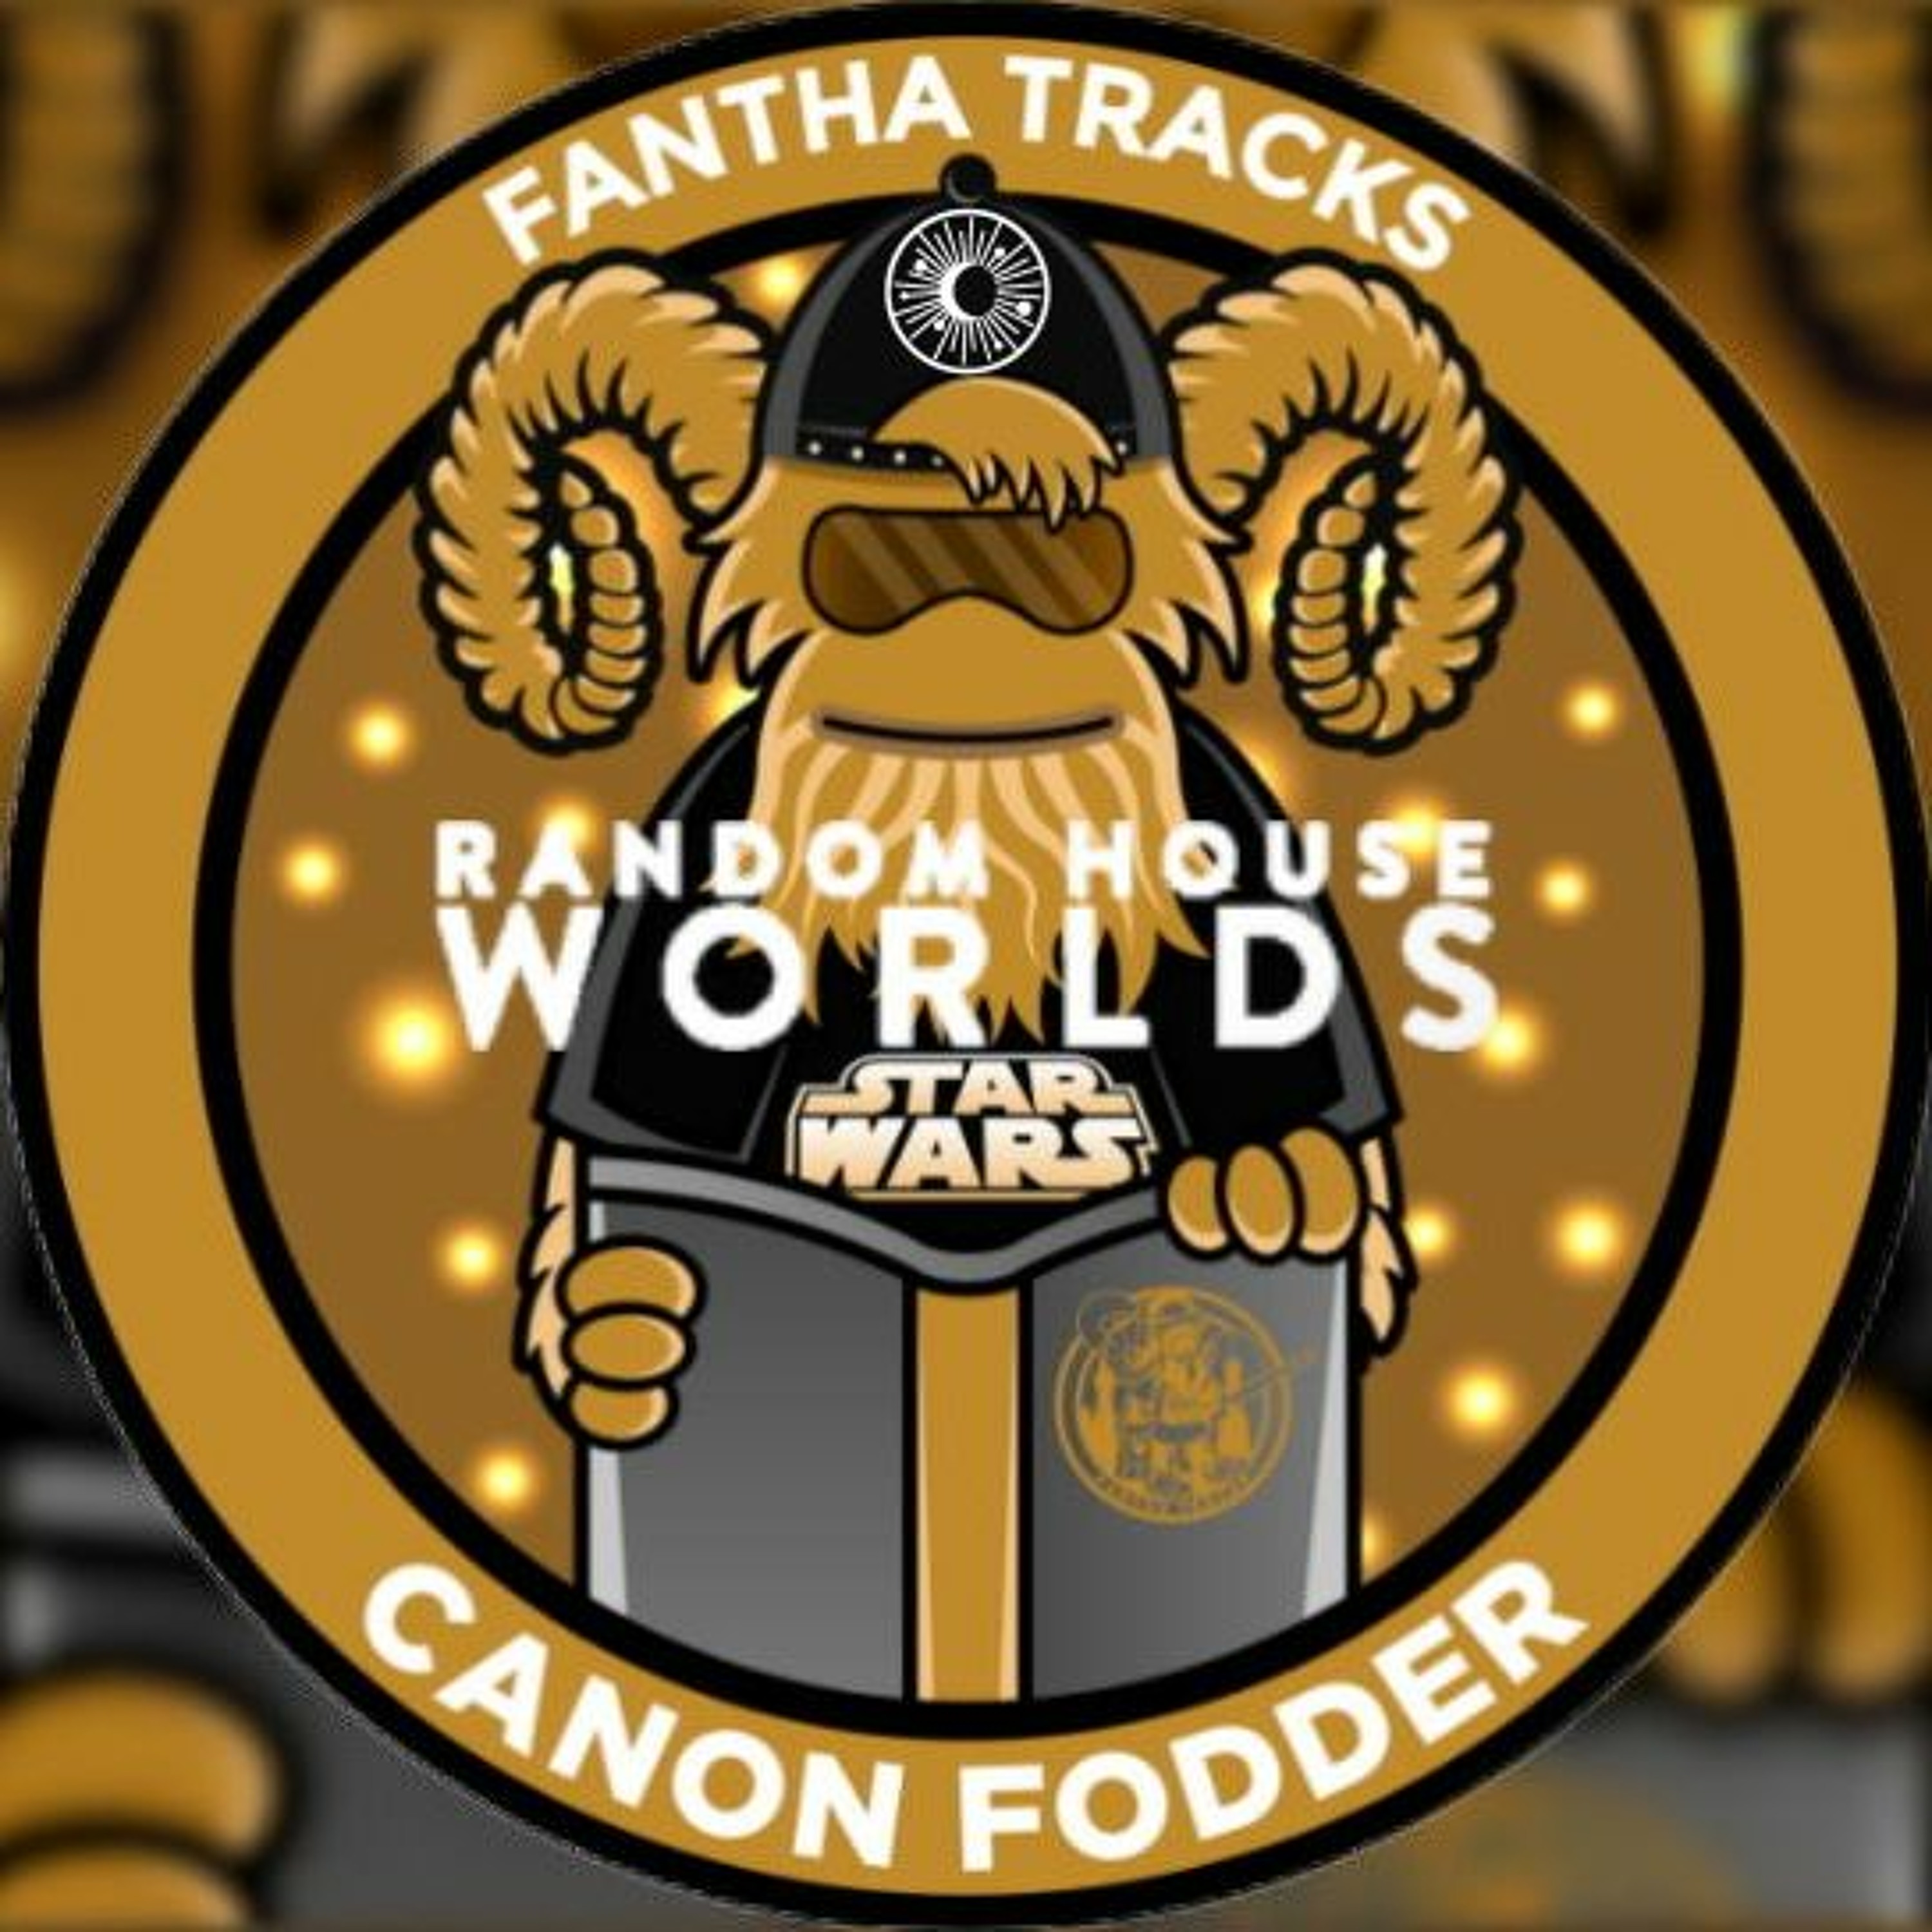 Canon Fodder: In conversation with Random House Worlds editor Tom Hoeler